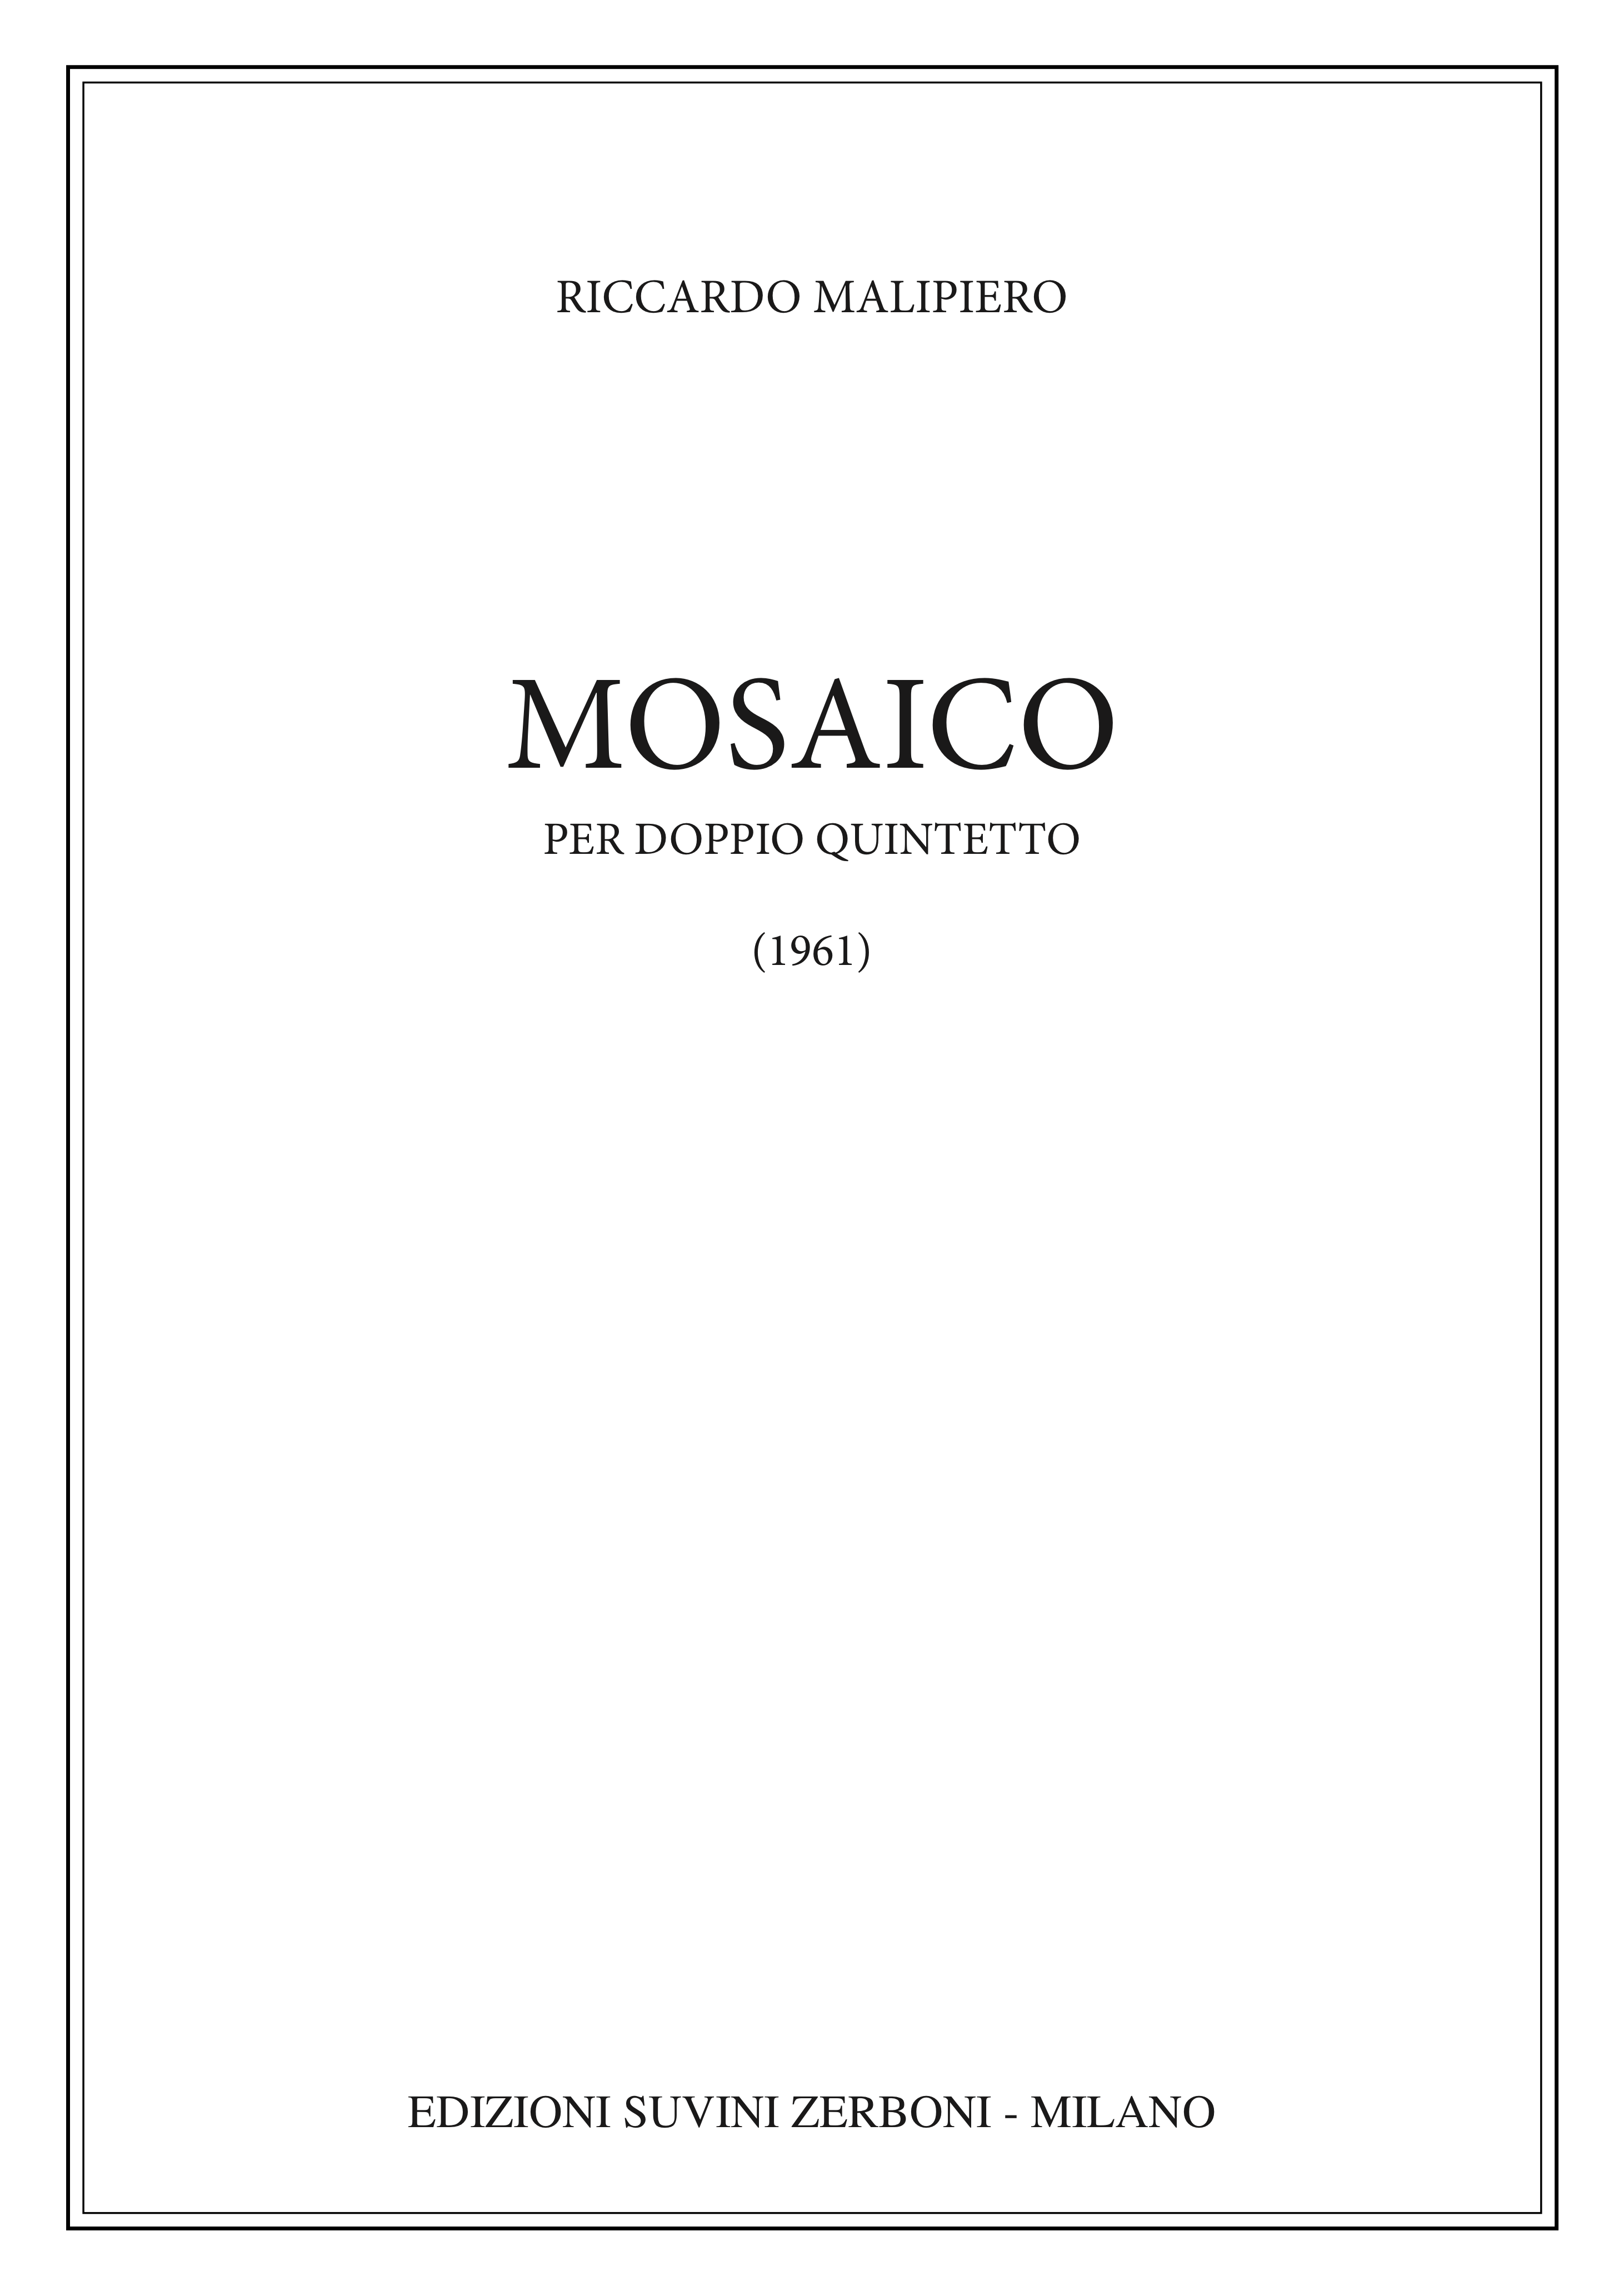 Mosaico_Malipiero Riccardo 1